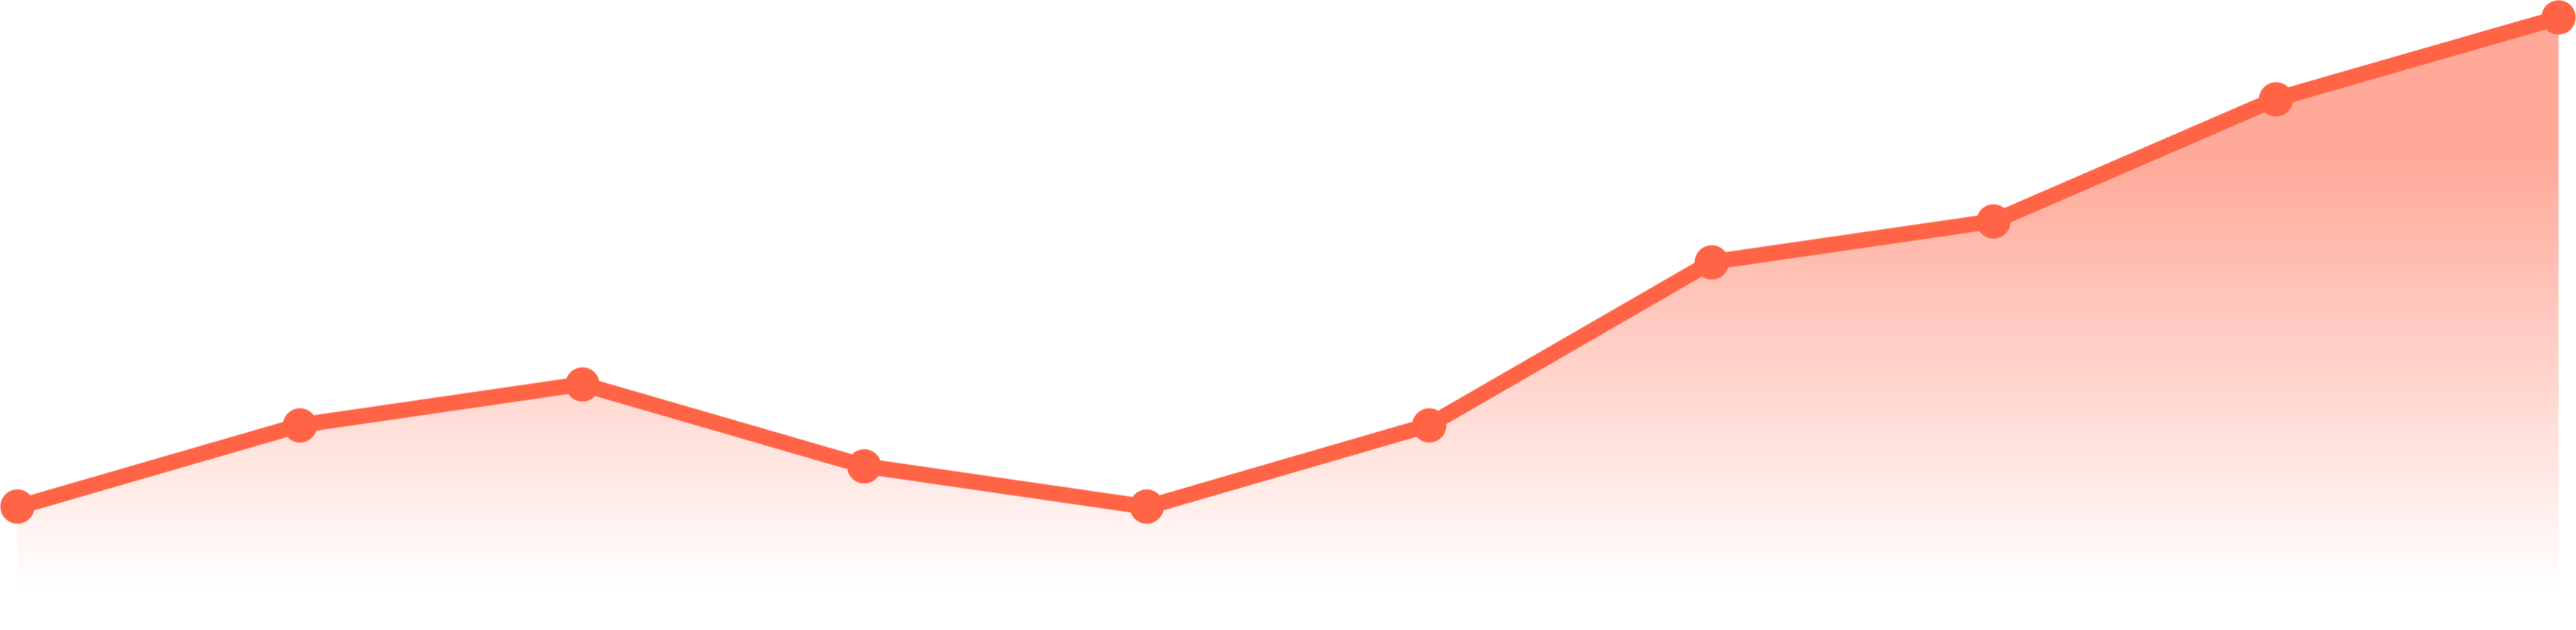 Consensys - Chart Demo - Line Chart Orange
